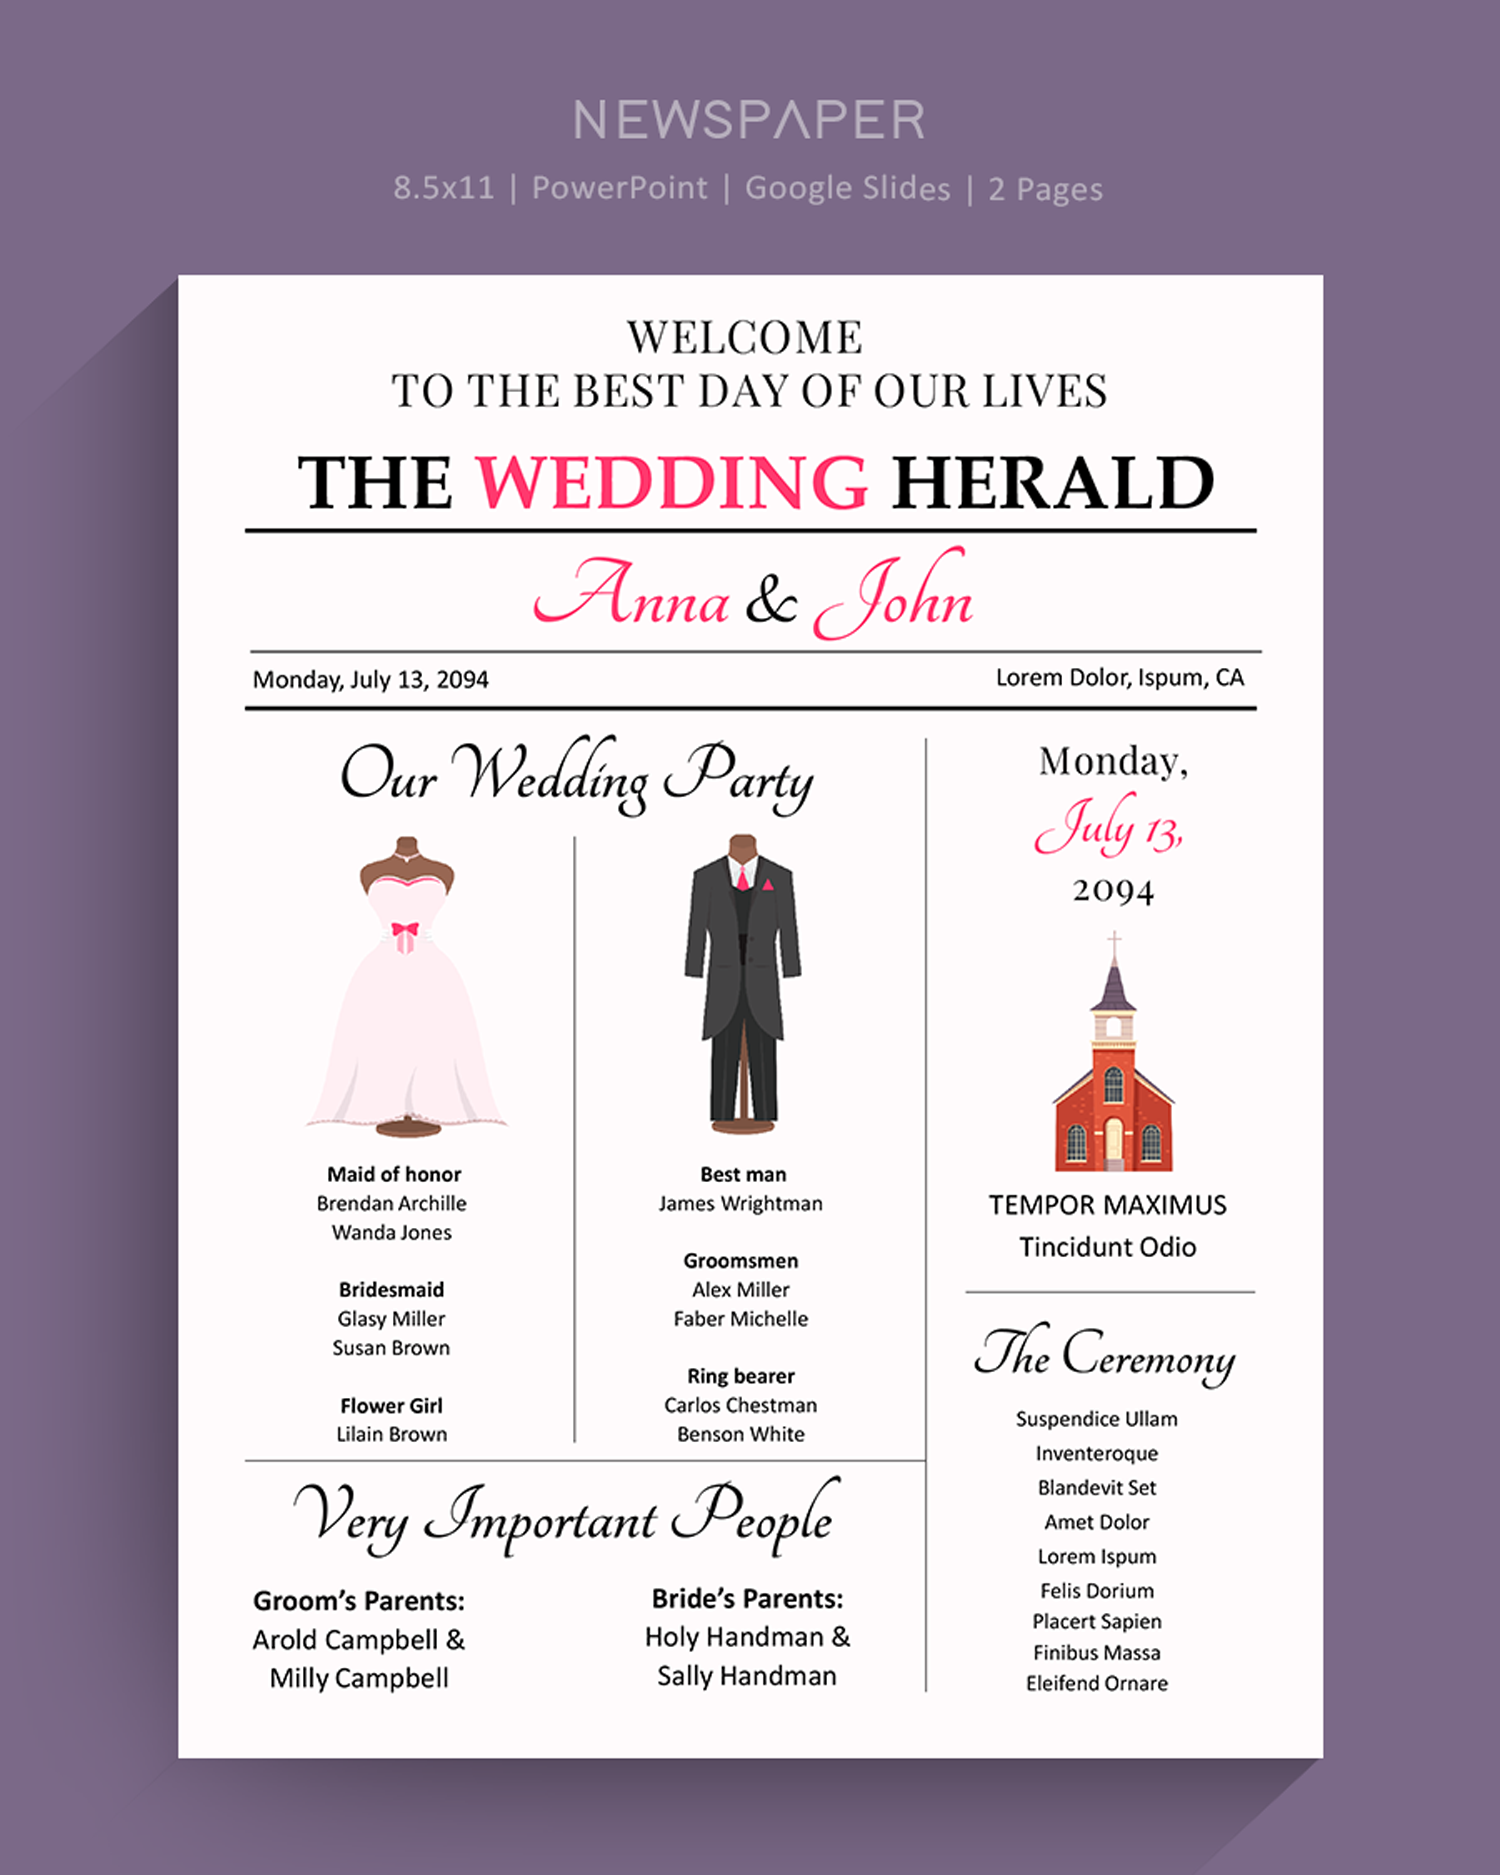 8.5x11 Infographic Wedding Program Template - PowerPoint, Google Slides